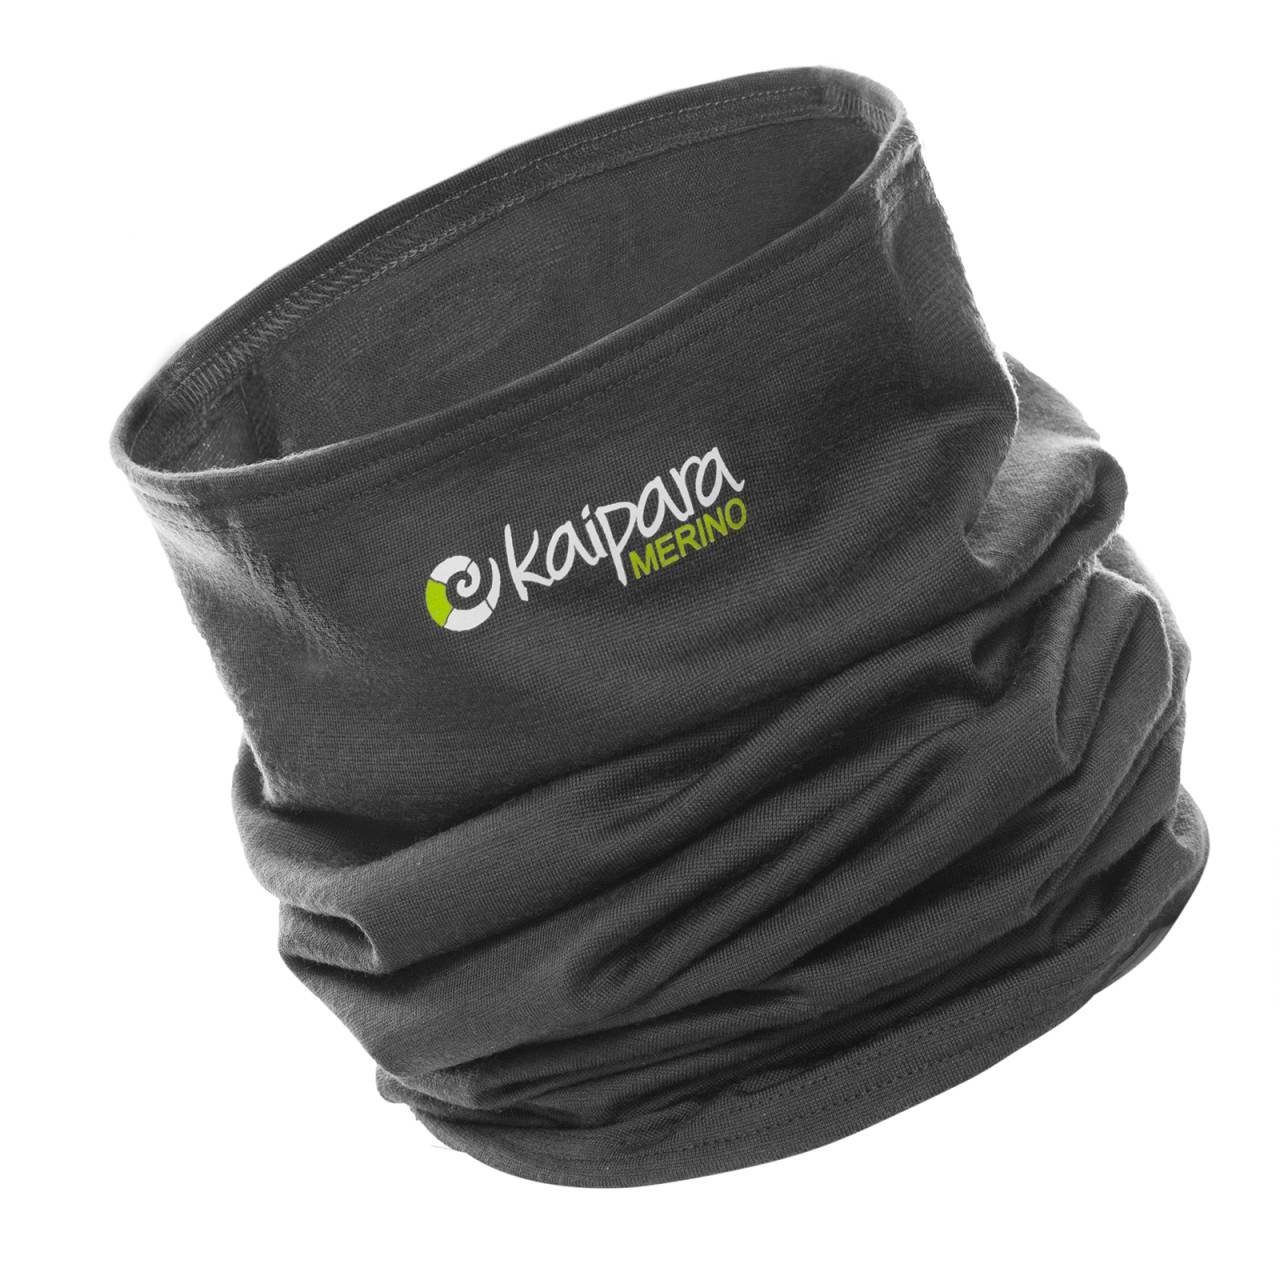 Kaipara Unisex aus Germany - Bandana Schal Made in Sportswear Anthrazit 200, Merino reiner Merino Merinowolle